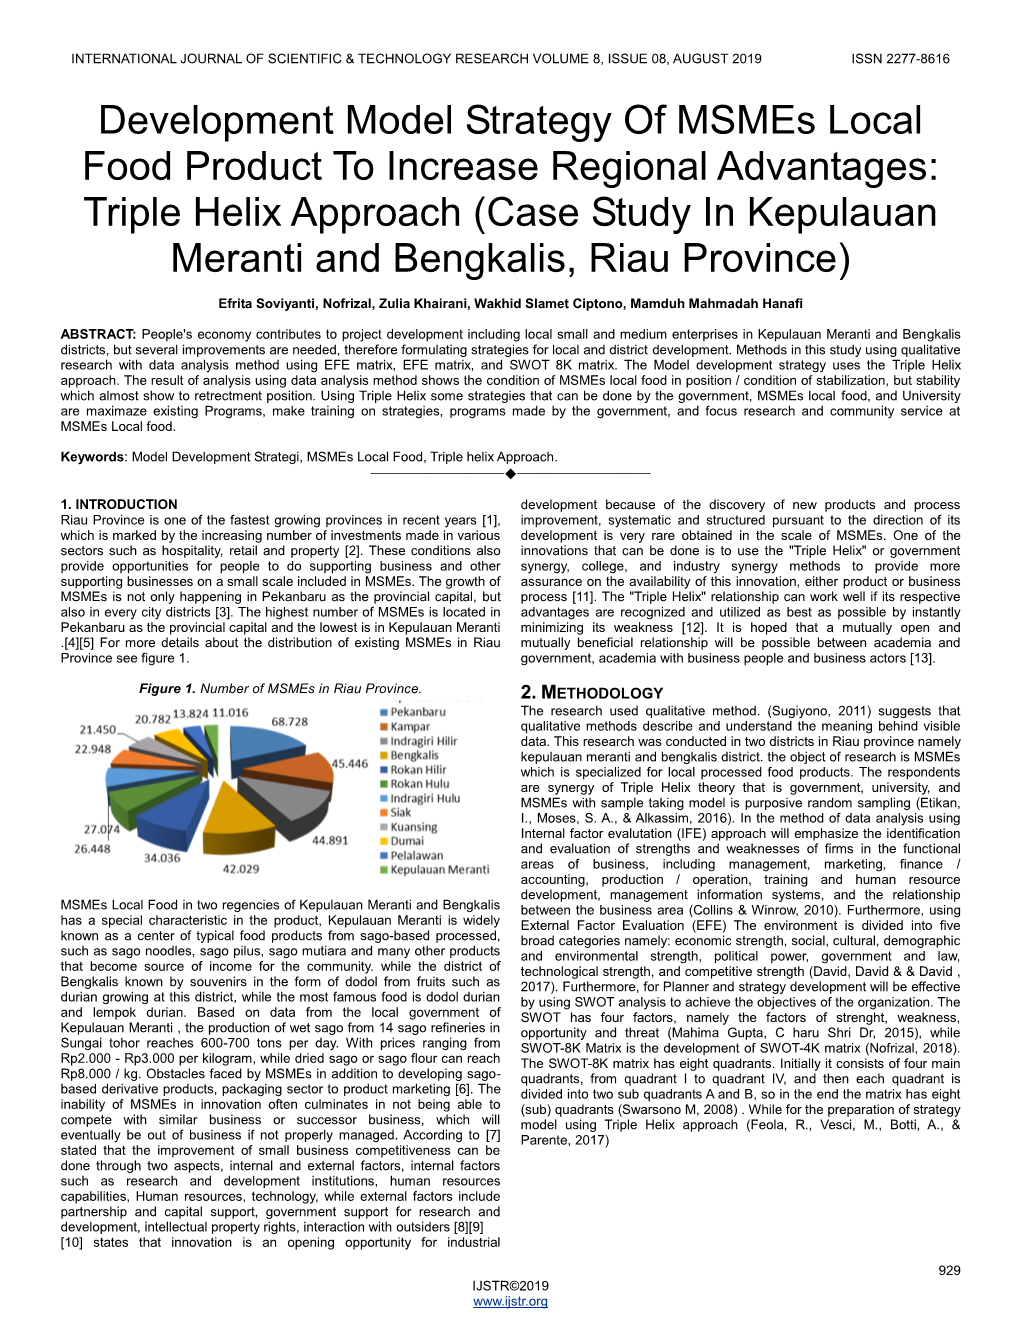 Triple Helix Approach (Case Study in Kepulauan Meranti and Bengkalis, Riau Province)